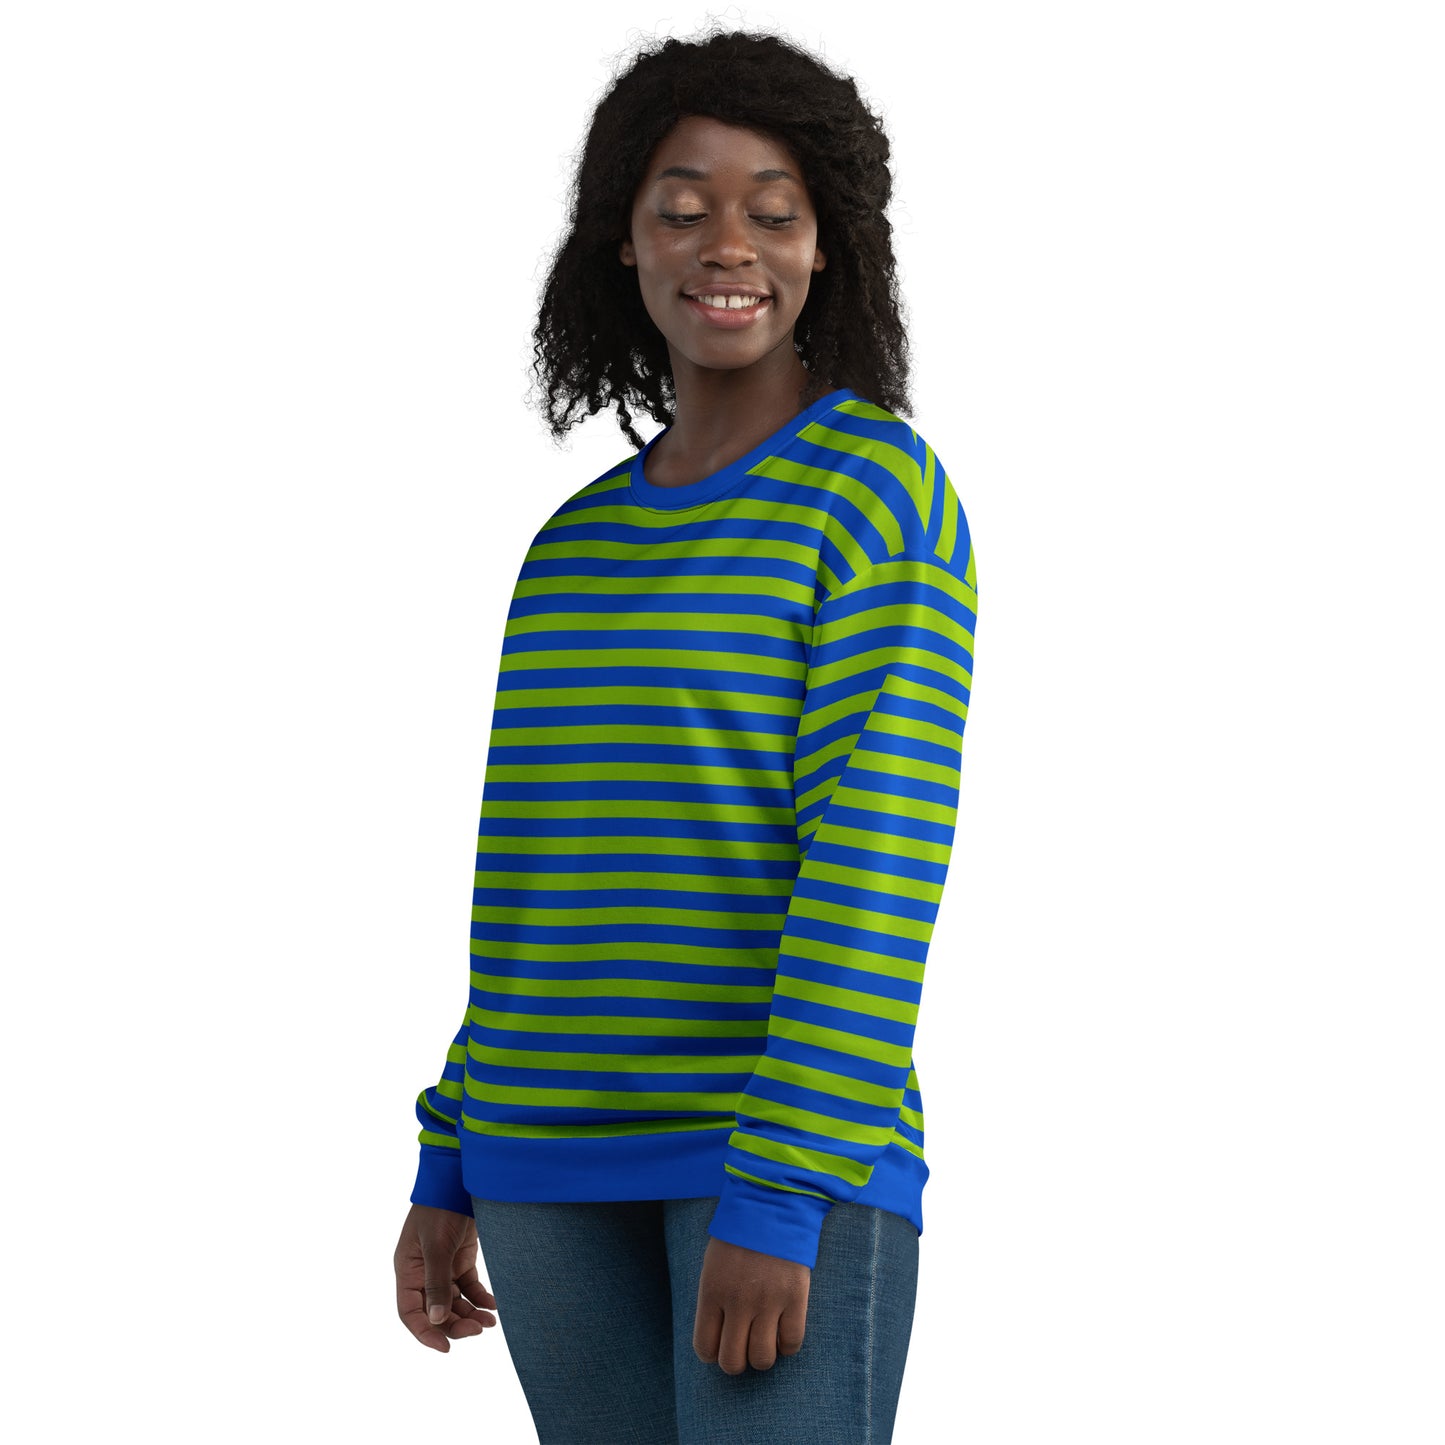 Serene Skyline: Trendy Men's and Women's Sweater in Vivid Stripes